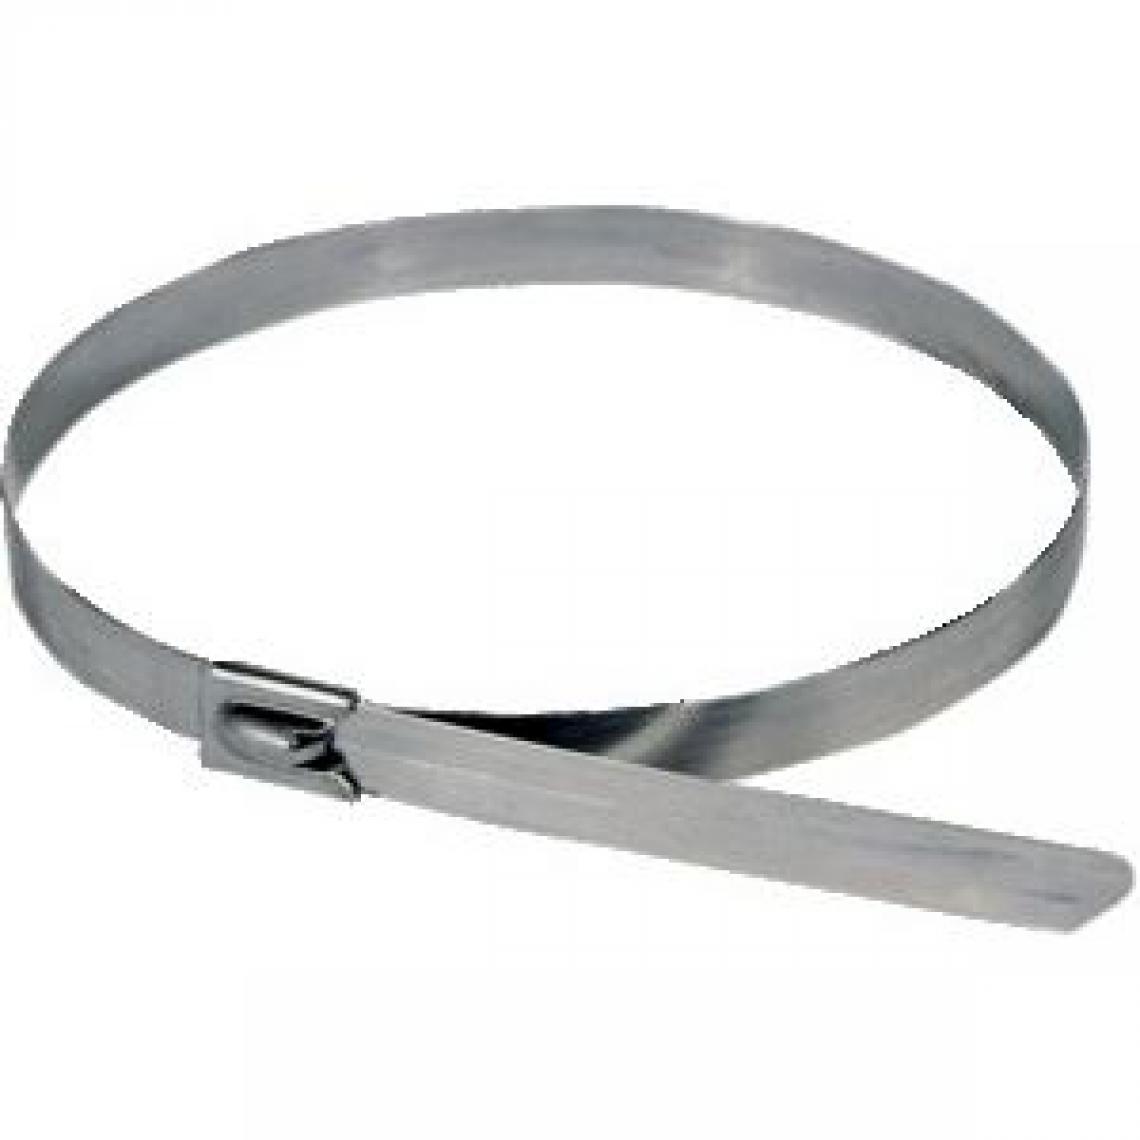 Bizline - collier de cablage - en inox - 350 x 7.9 mm x 50 - bizline 300123 - Accessoires de câblage